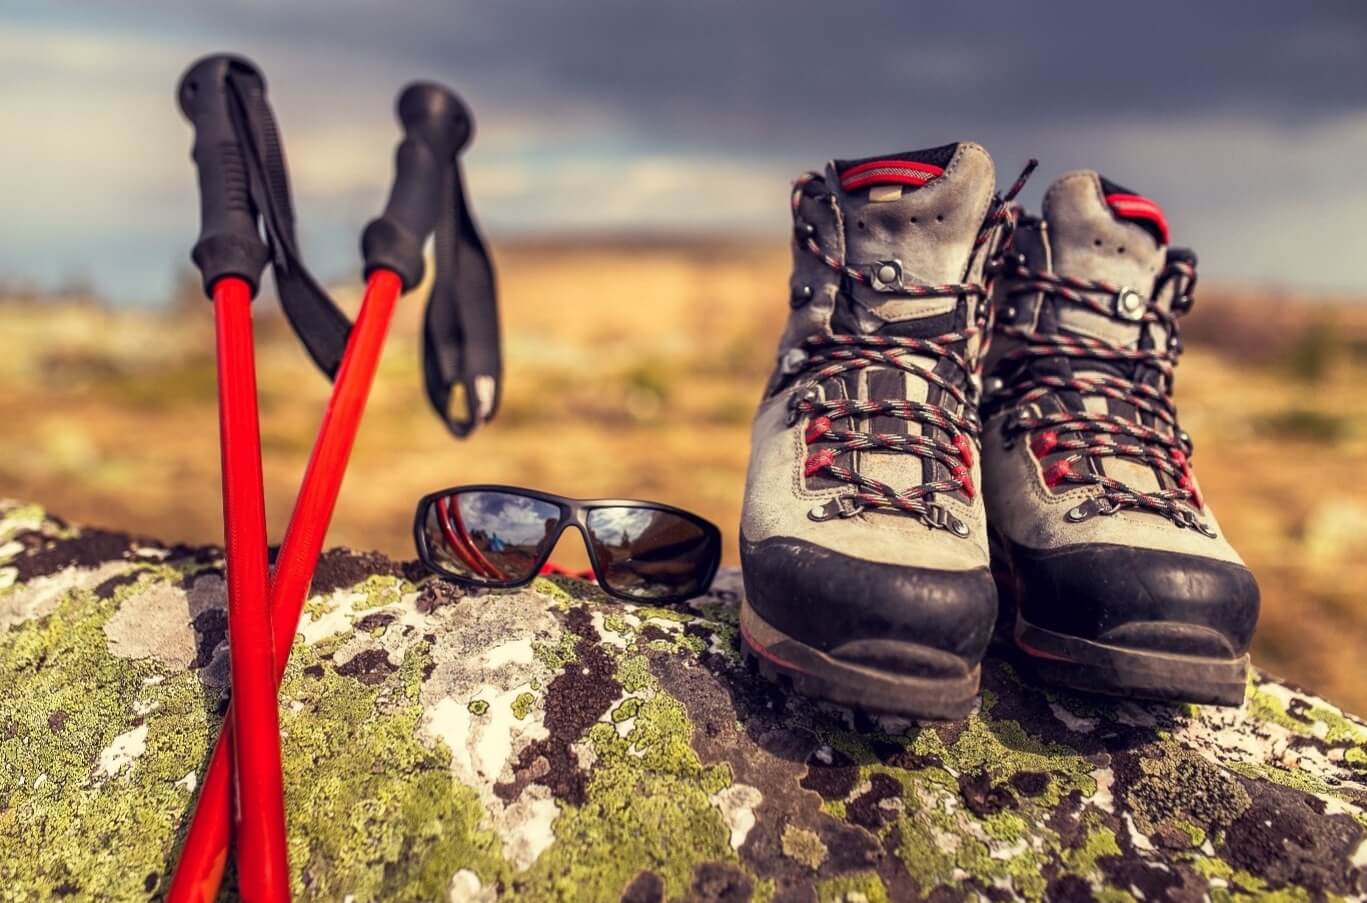 Meradalir Volcano eruption - Hiking boots